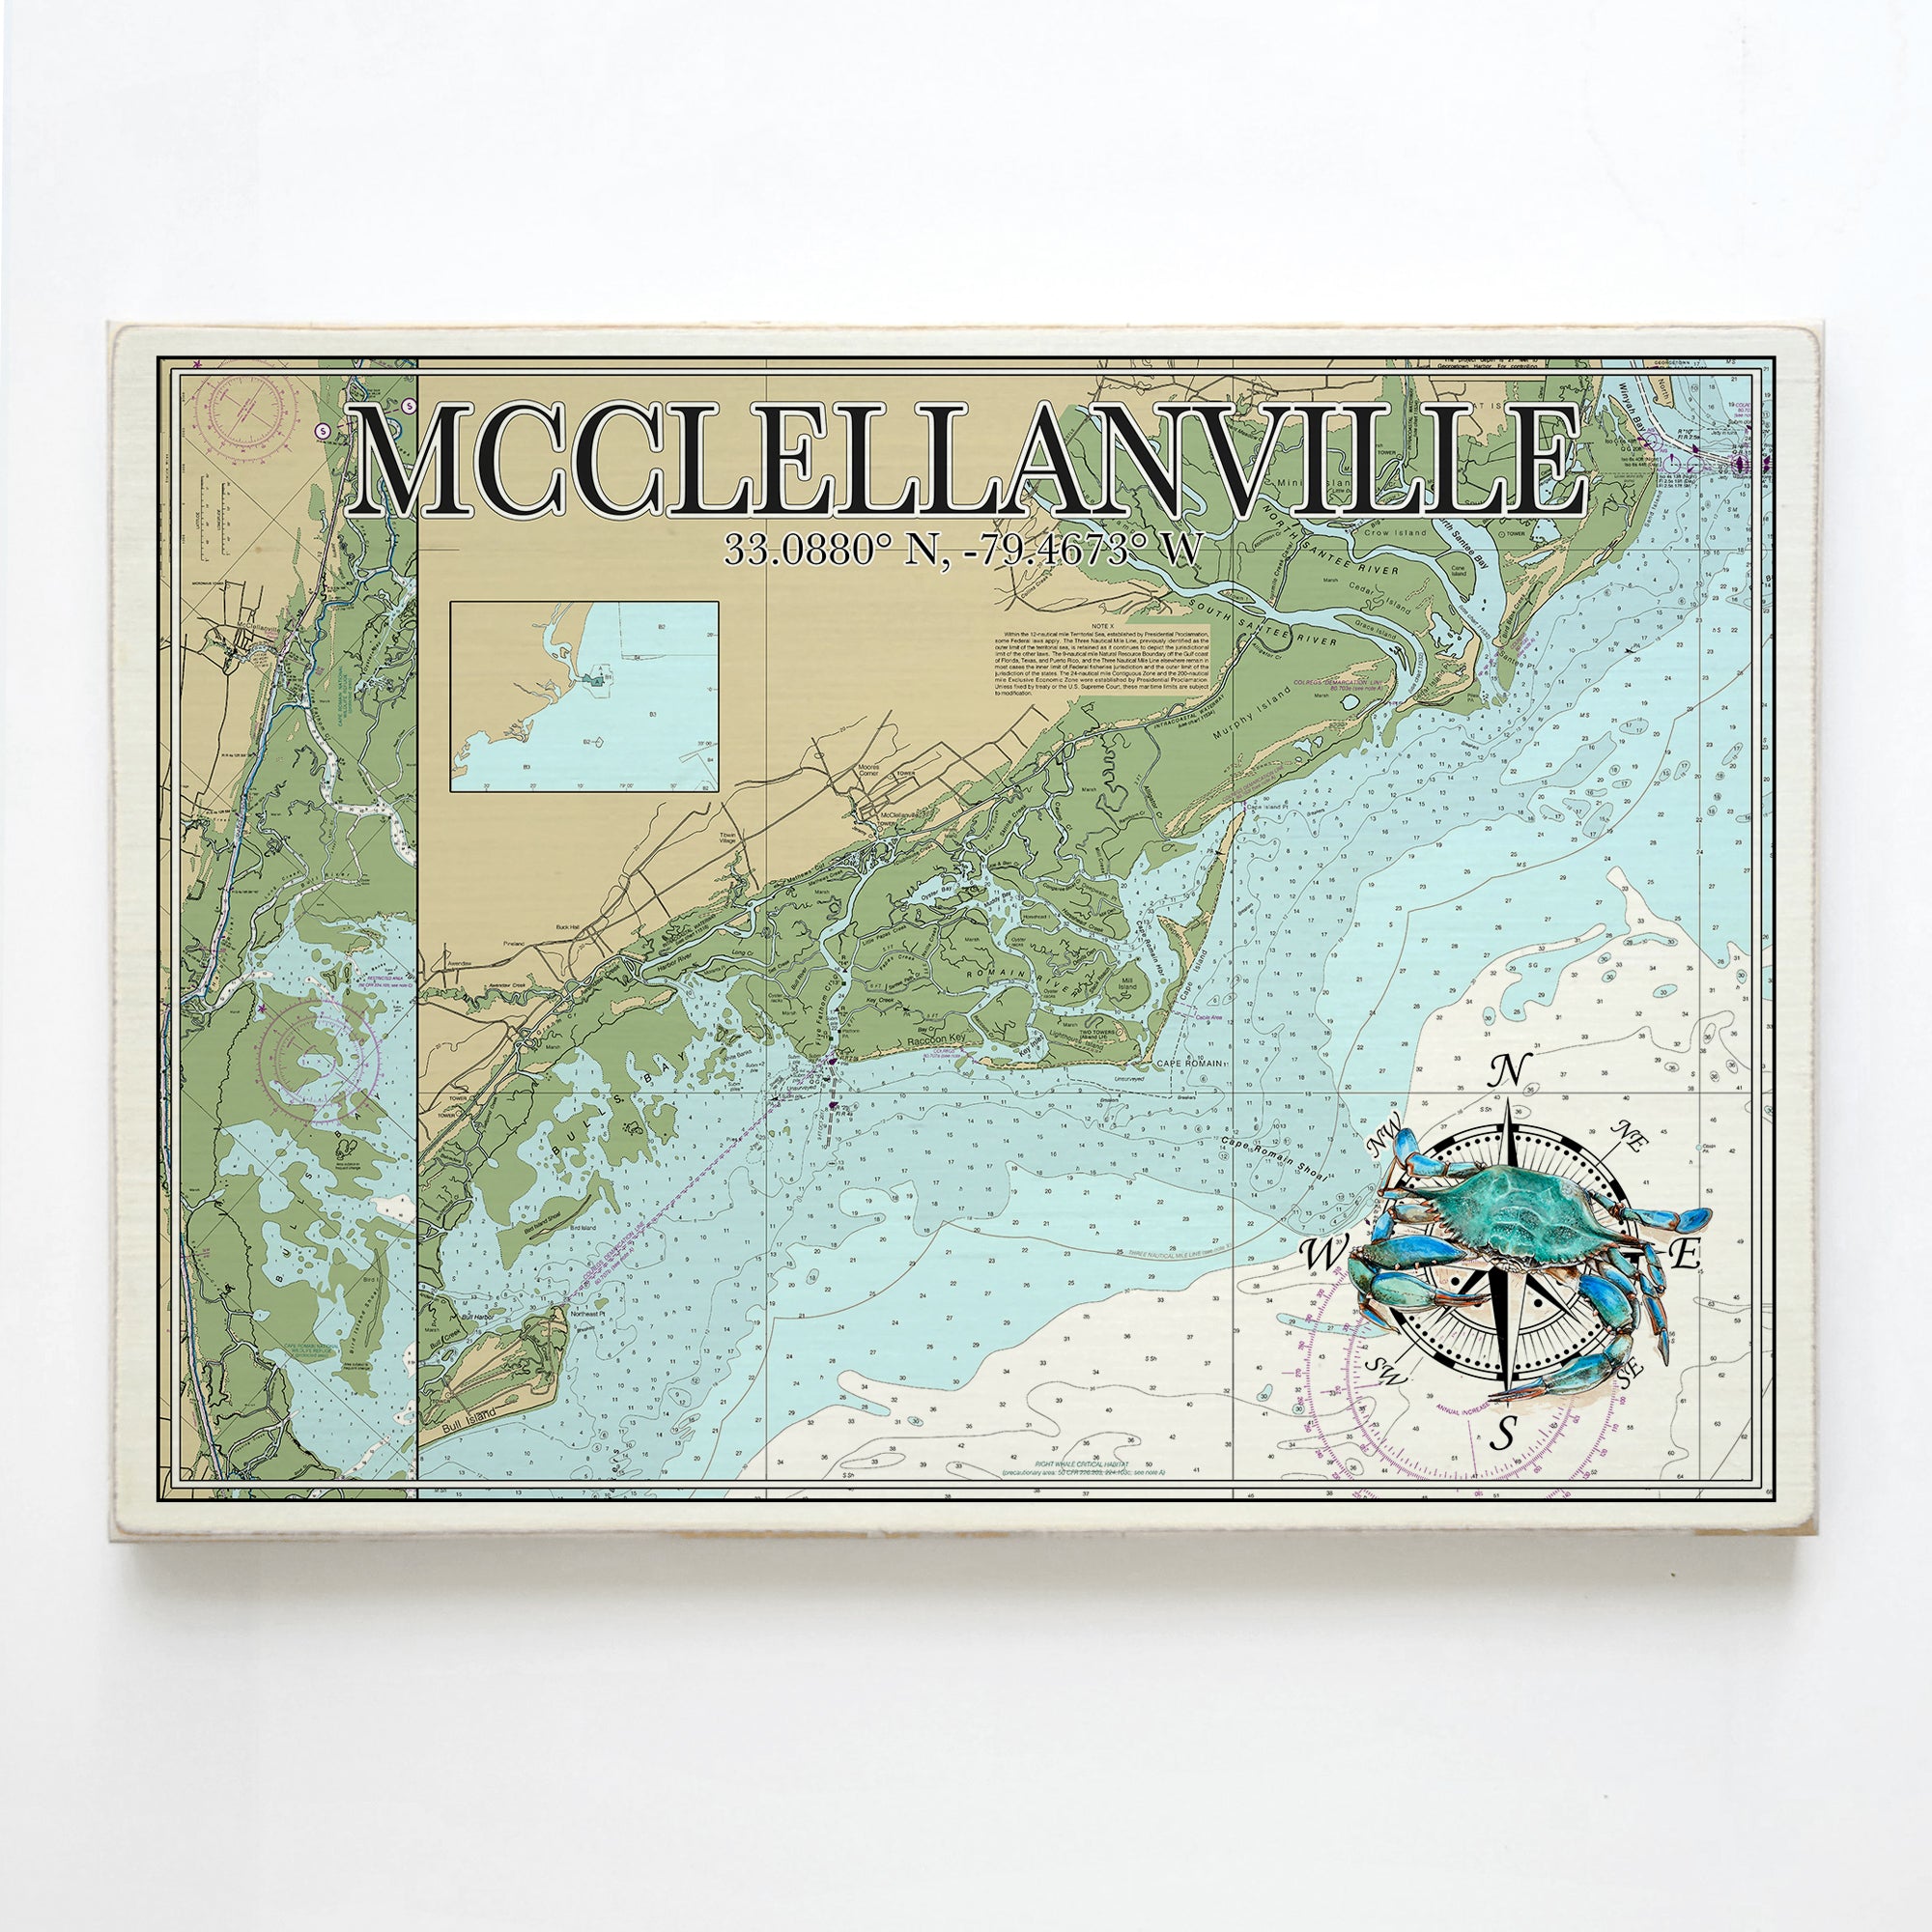 McClellanville, SC  Plank Map